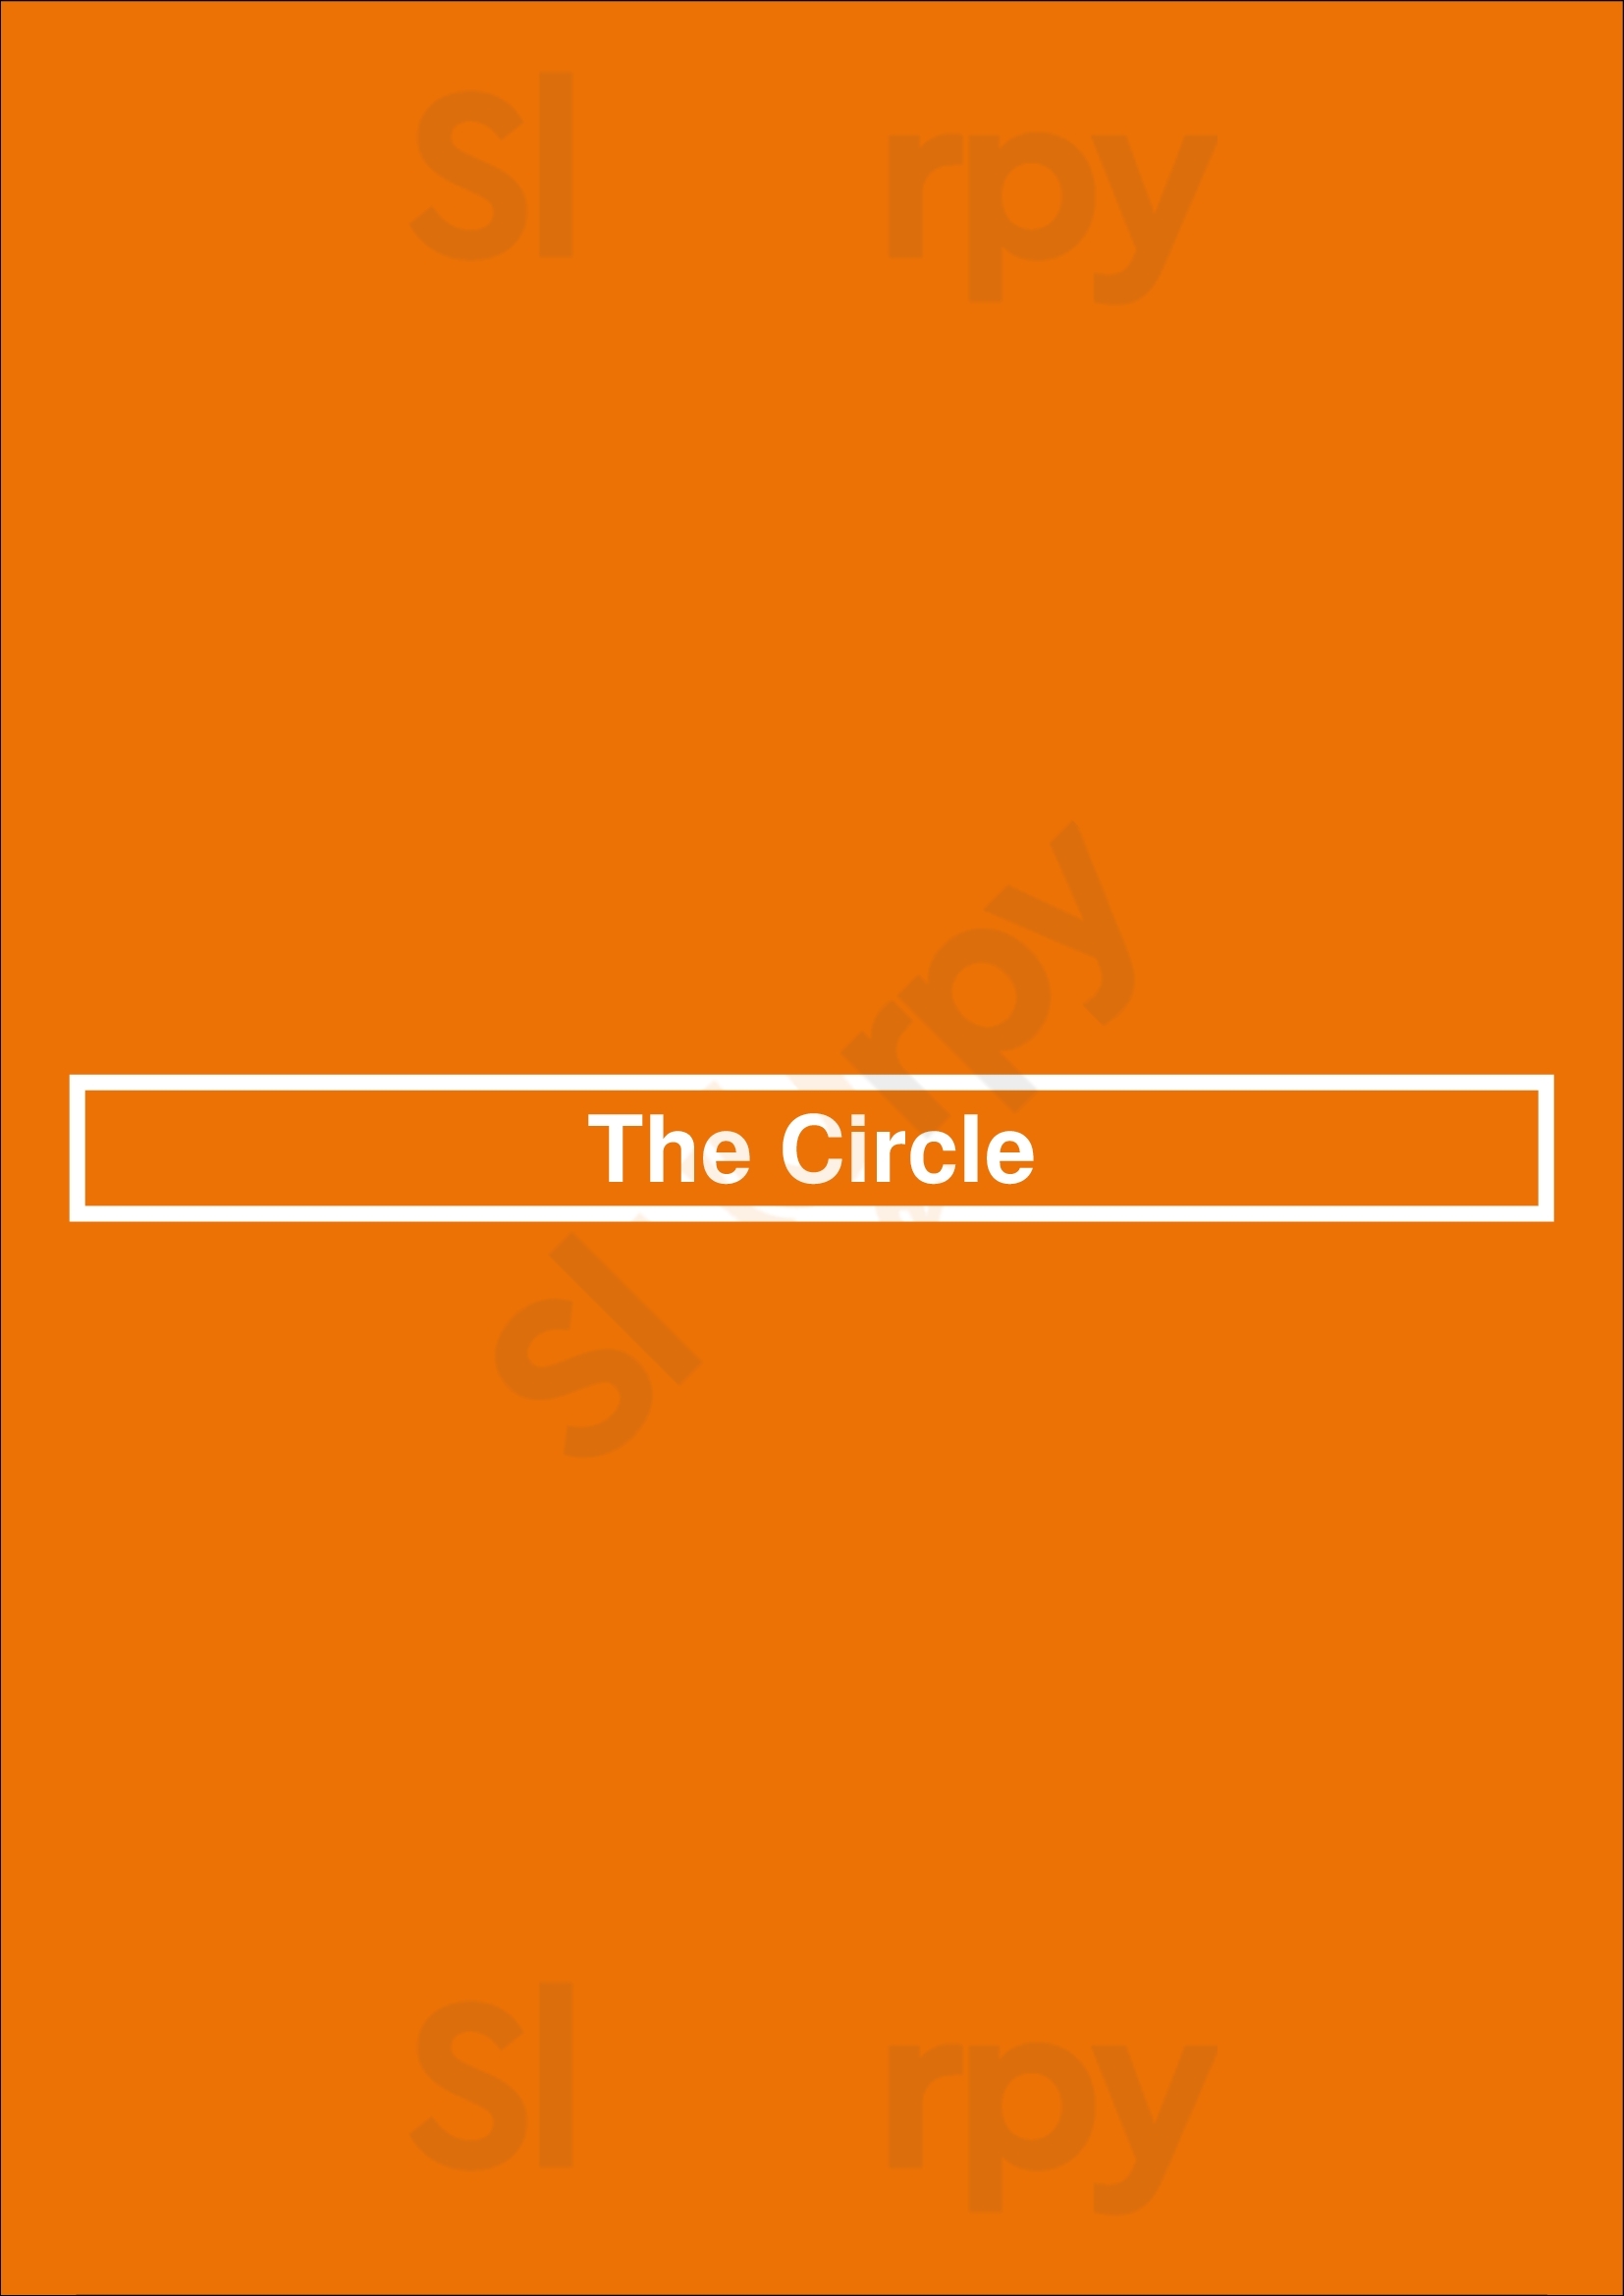 The Circle Boston Menu - 1